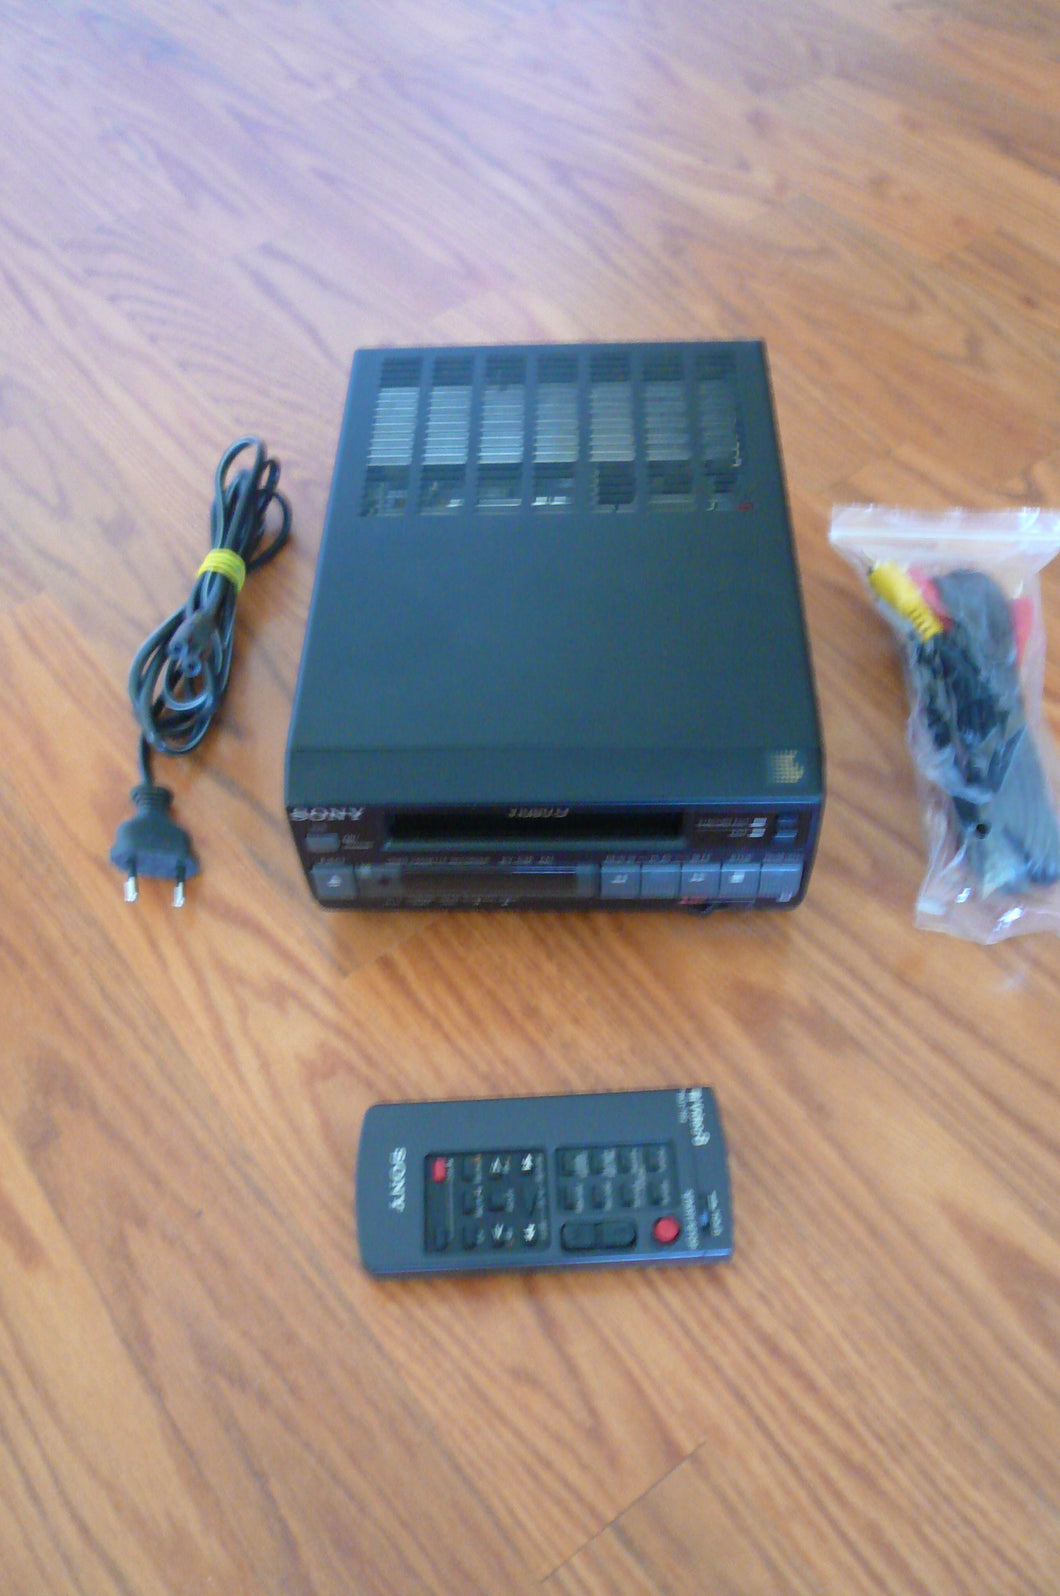 Sony EV-C3e 8mm pal system analog VCR plays 8mm video8 pal tapes